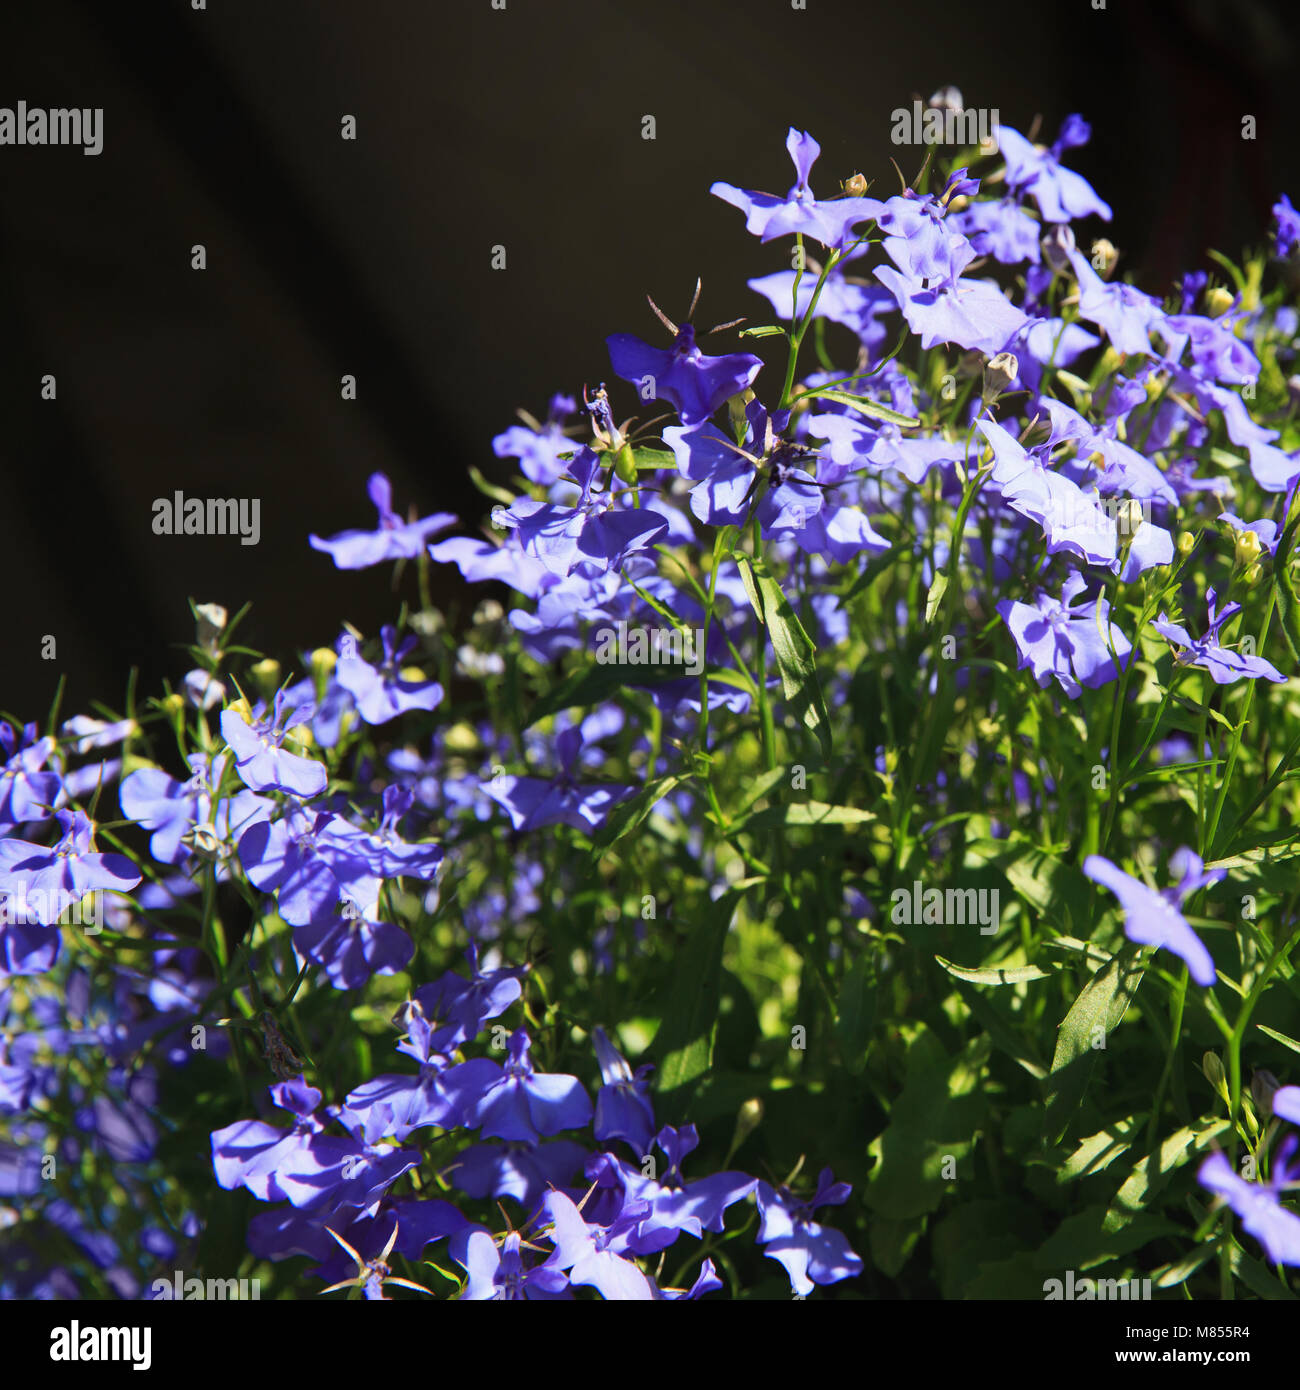 Blue Trailing Lobelia Sapphire flowers or Edging Lobelia, Garden Lobelia in St. Gallen, Switzerland. Its Latin name is Lobelia Erinus 'Sapphire', native to South Africa, Malawi and Namibia. Stock Photo